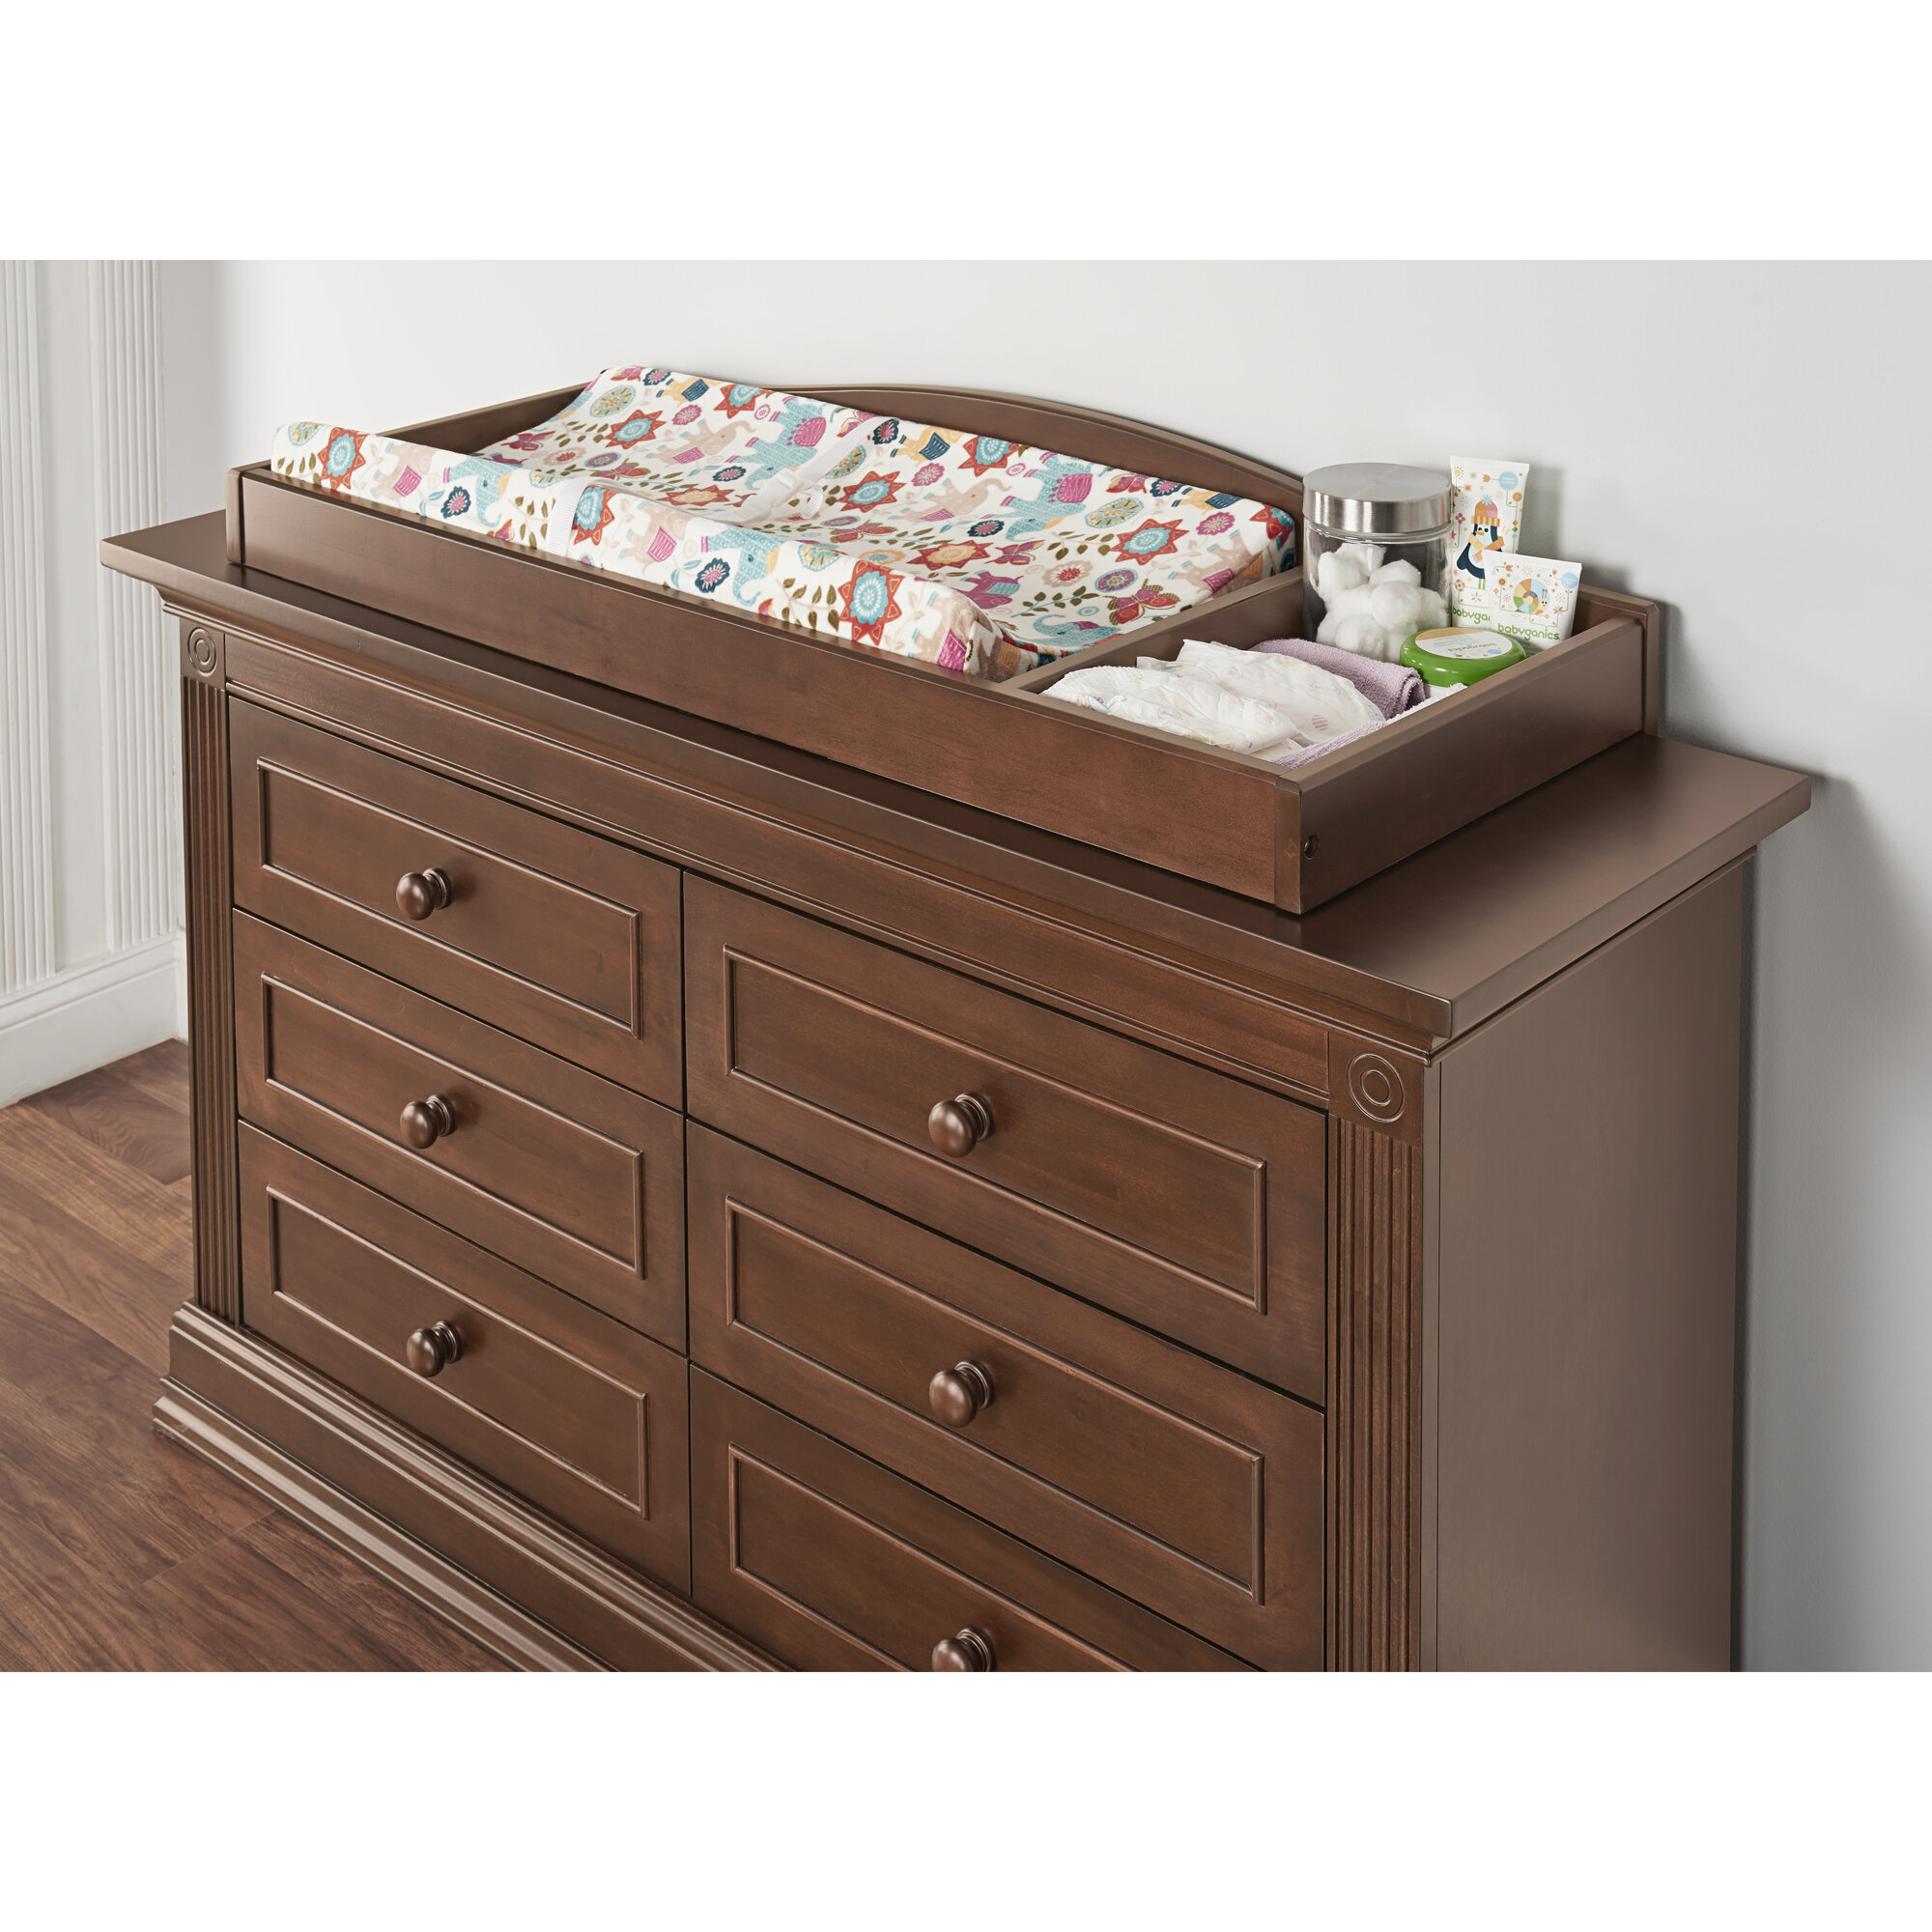 Baby Cache Montana Changing Table Dresser Reviews Wayfair Ca